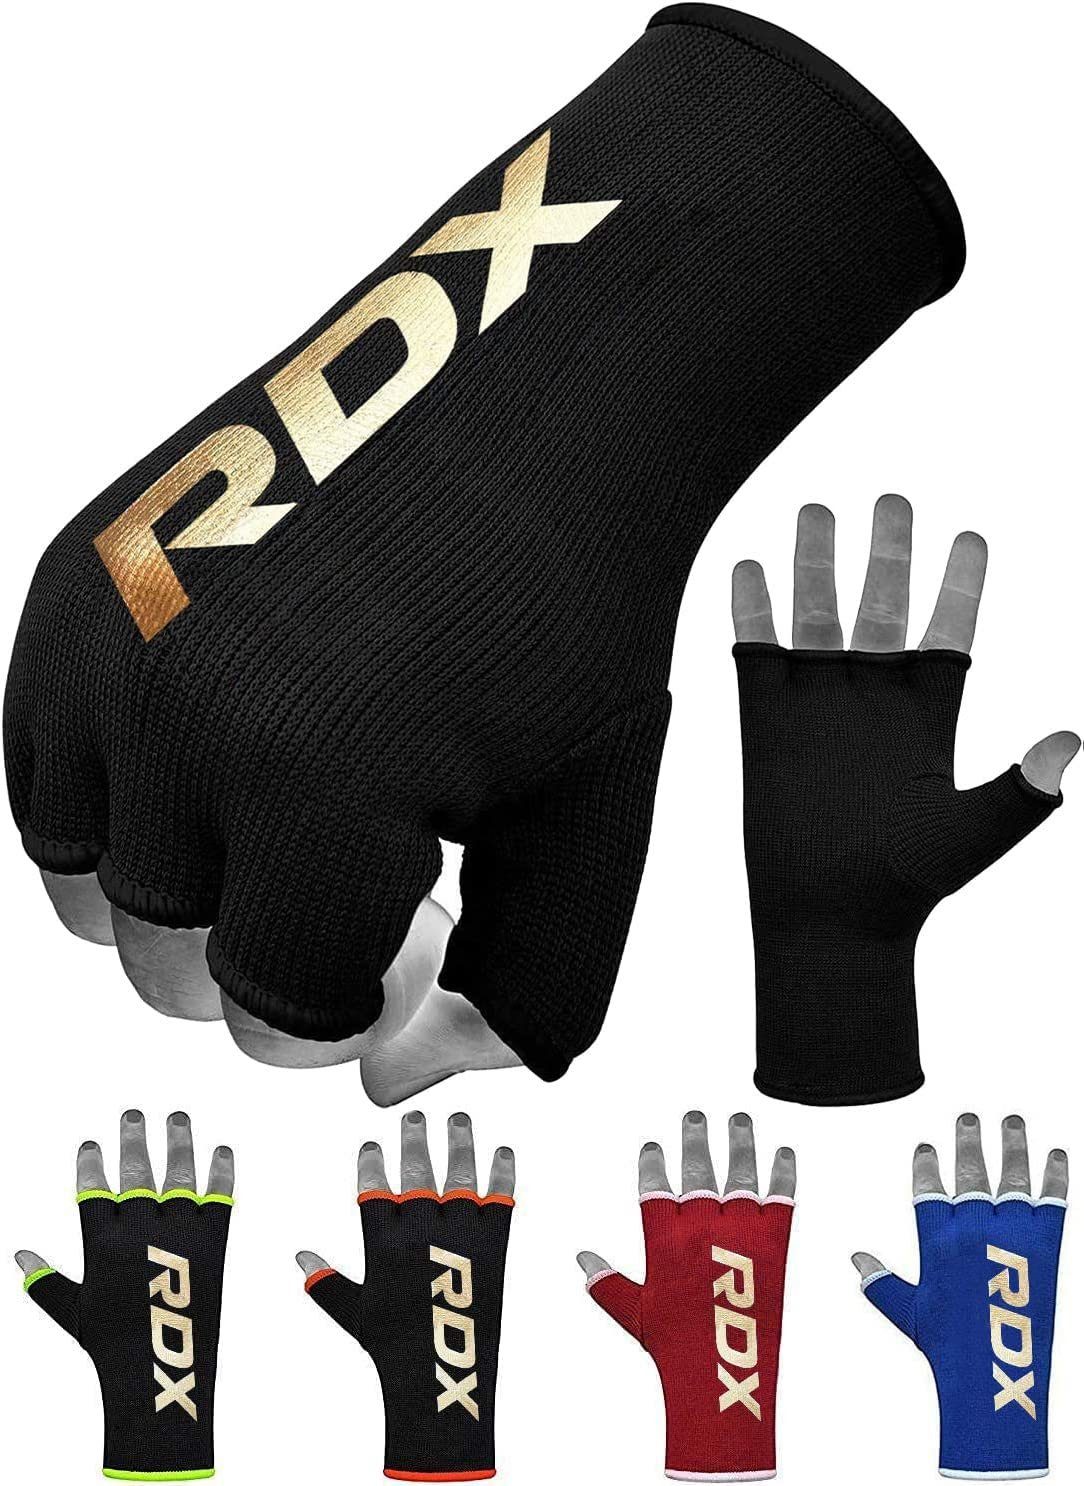 RDX Sports Boxbandagen RDX Innere Handschuhe Boxen Training, Boxbandagen Sparring Hand Wraps